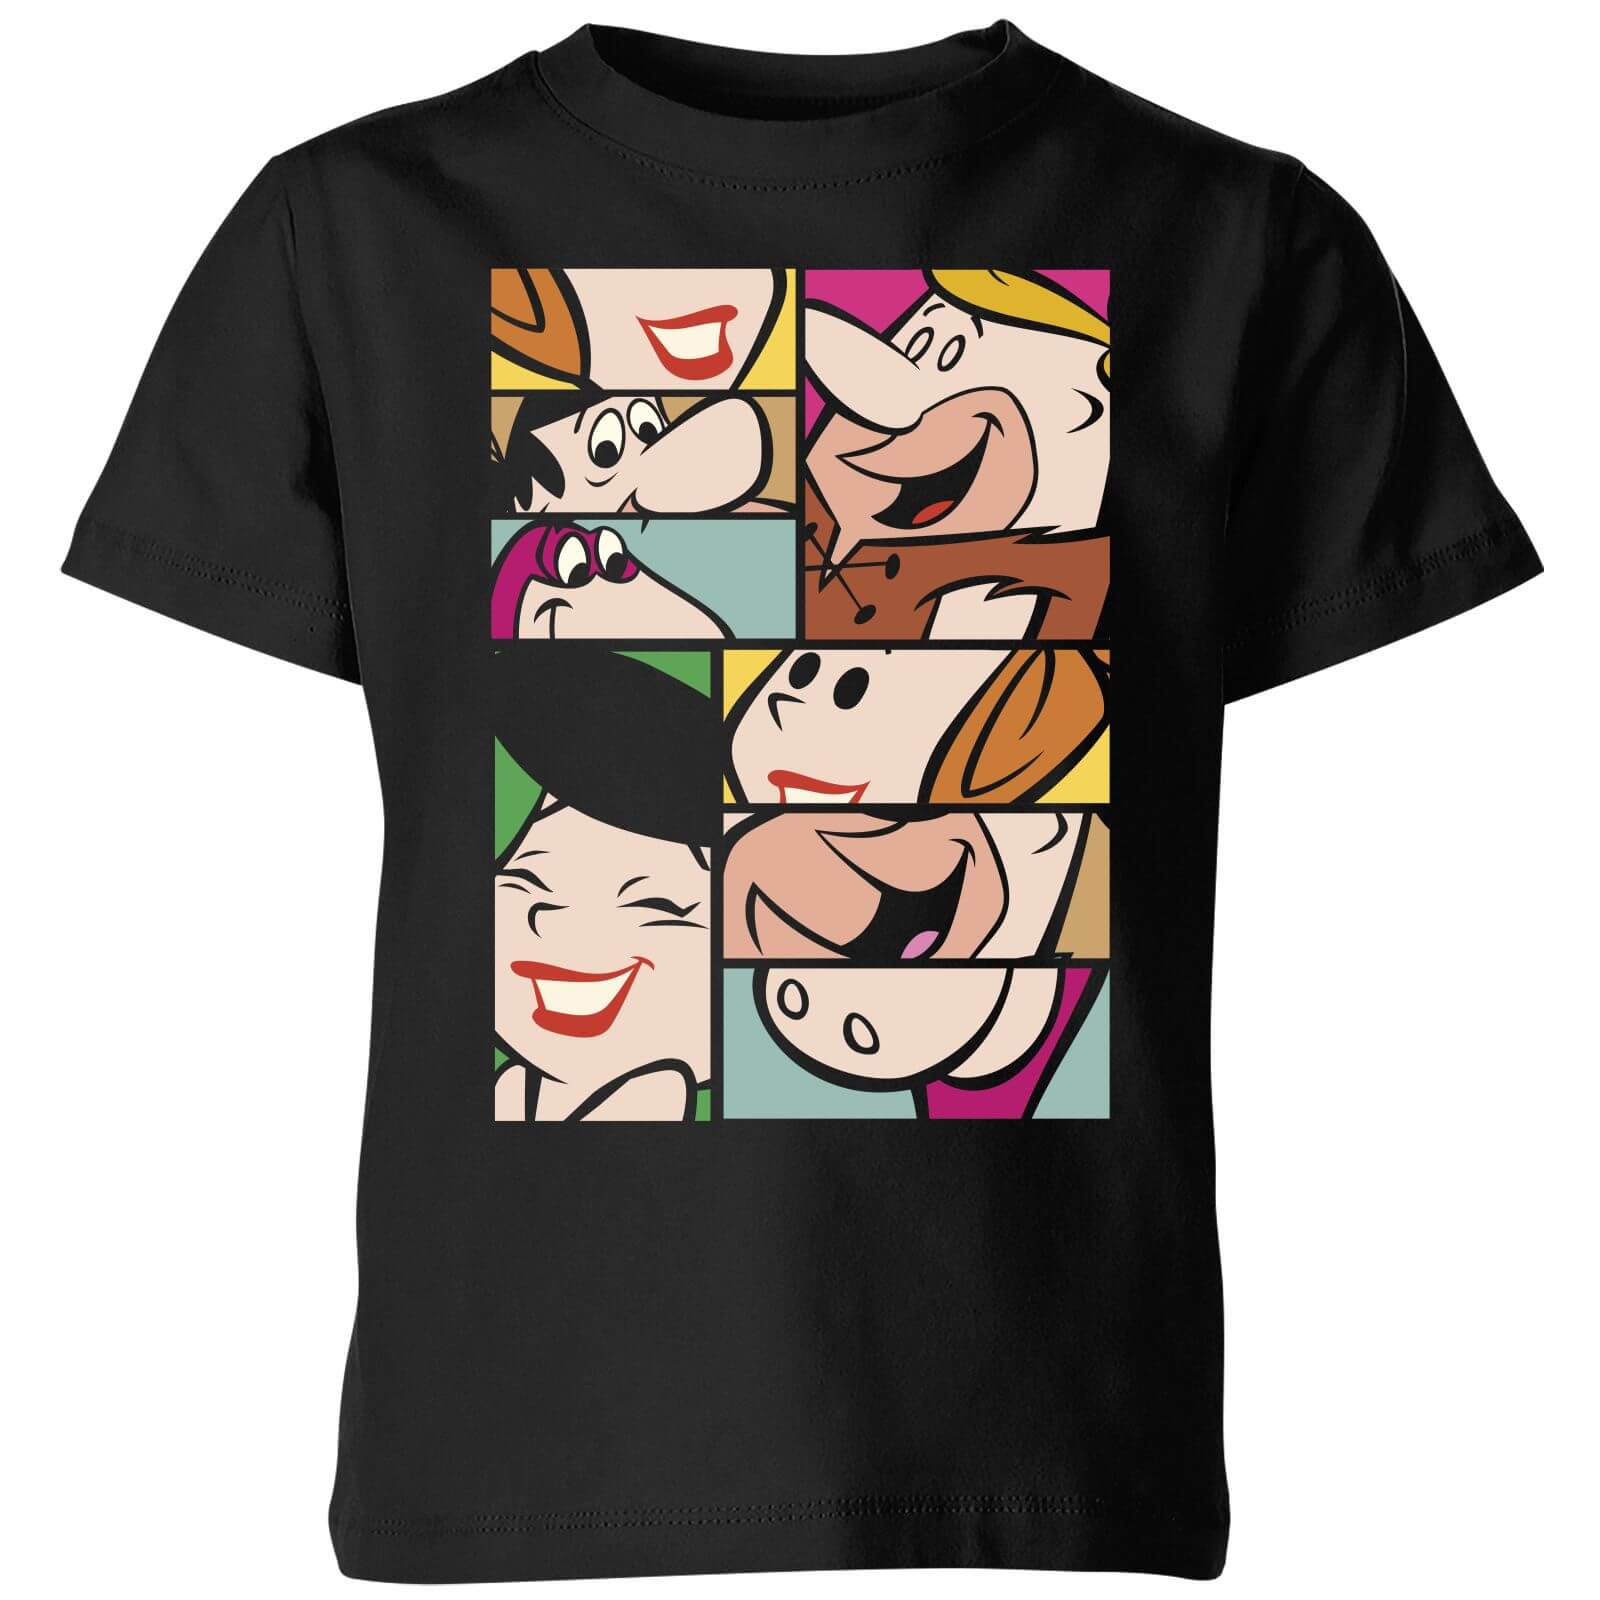 Hanna Barbera The Flintstones Cartoon Squares Kids' T-Shirt - Black - 11-12 Years - Black